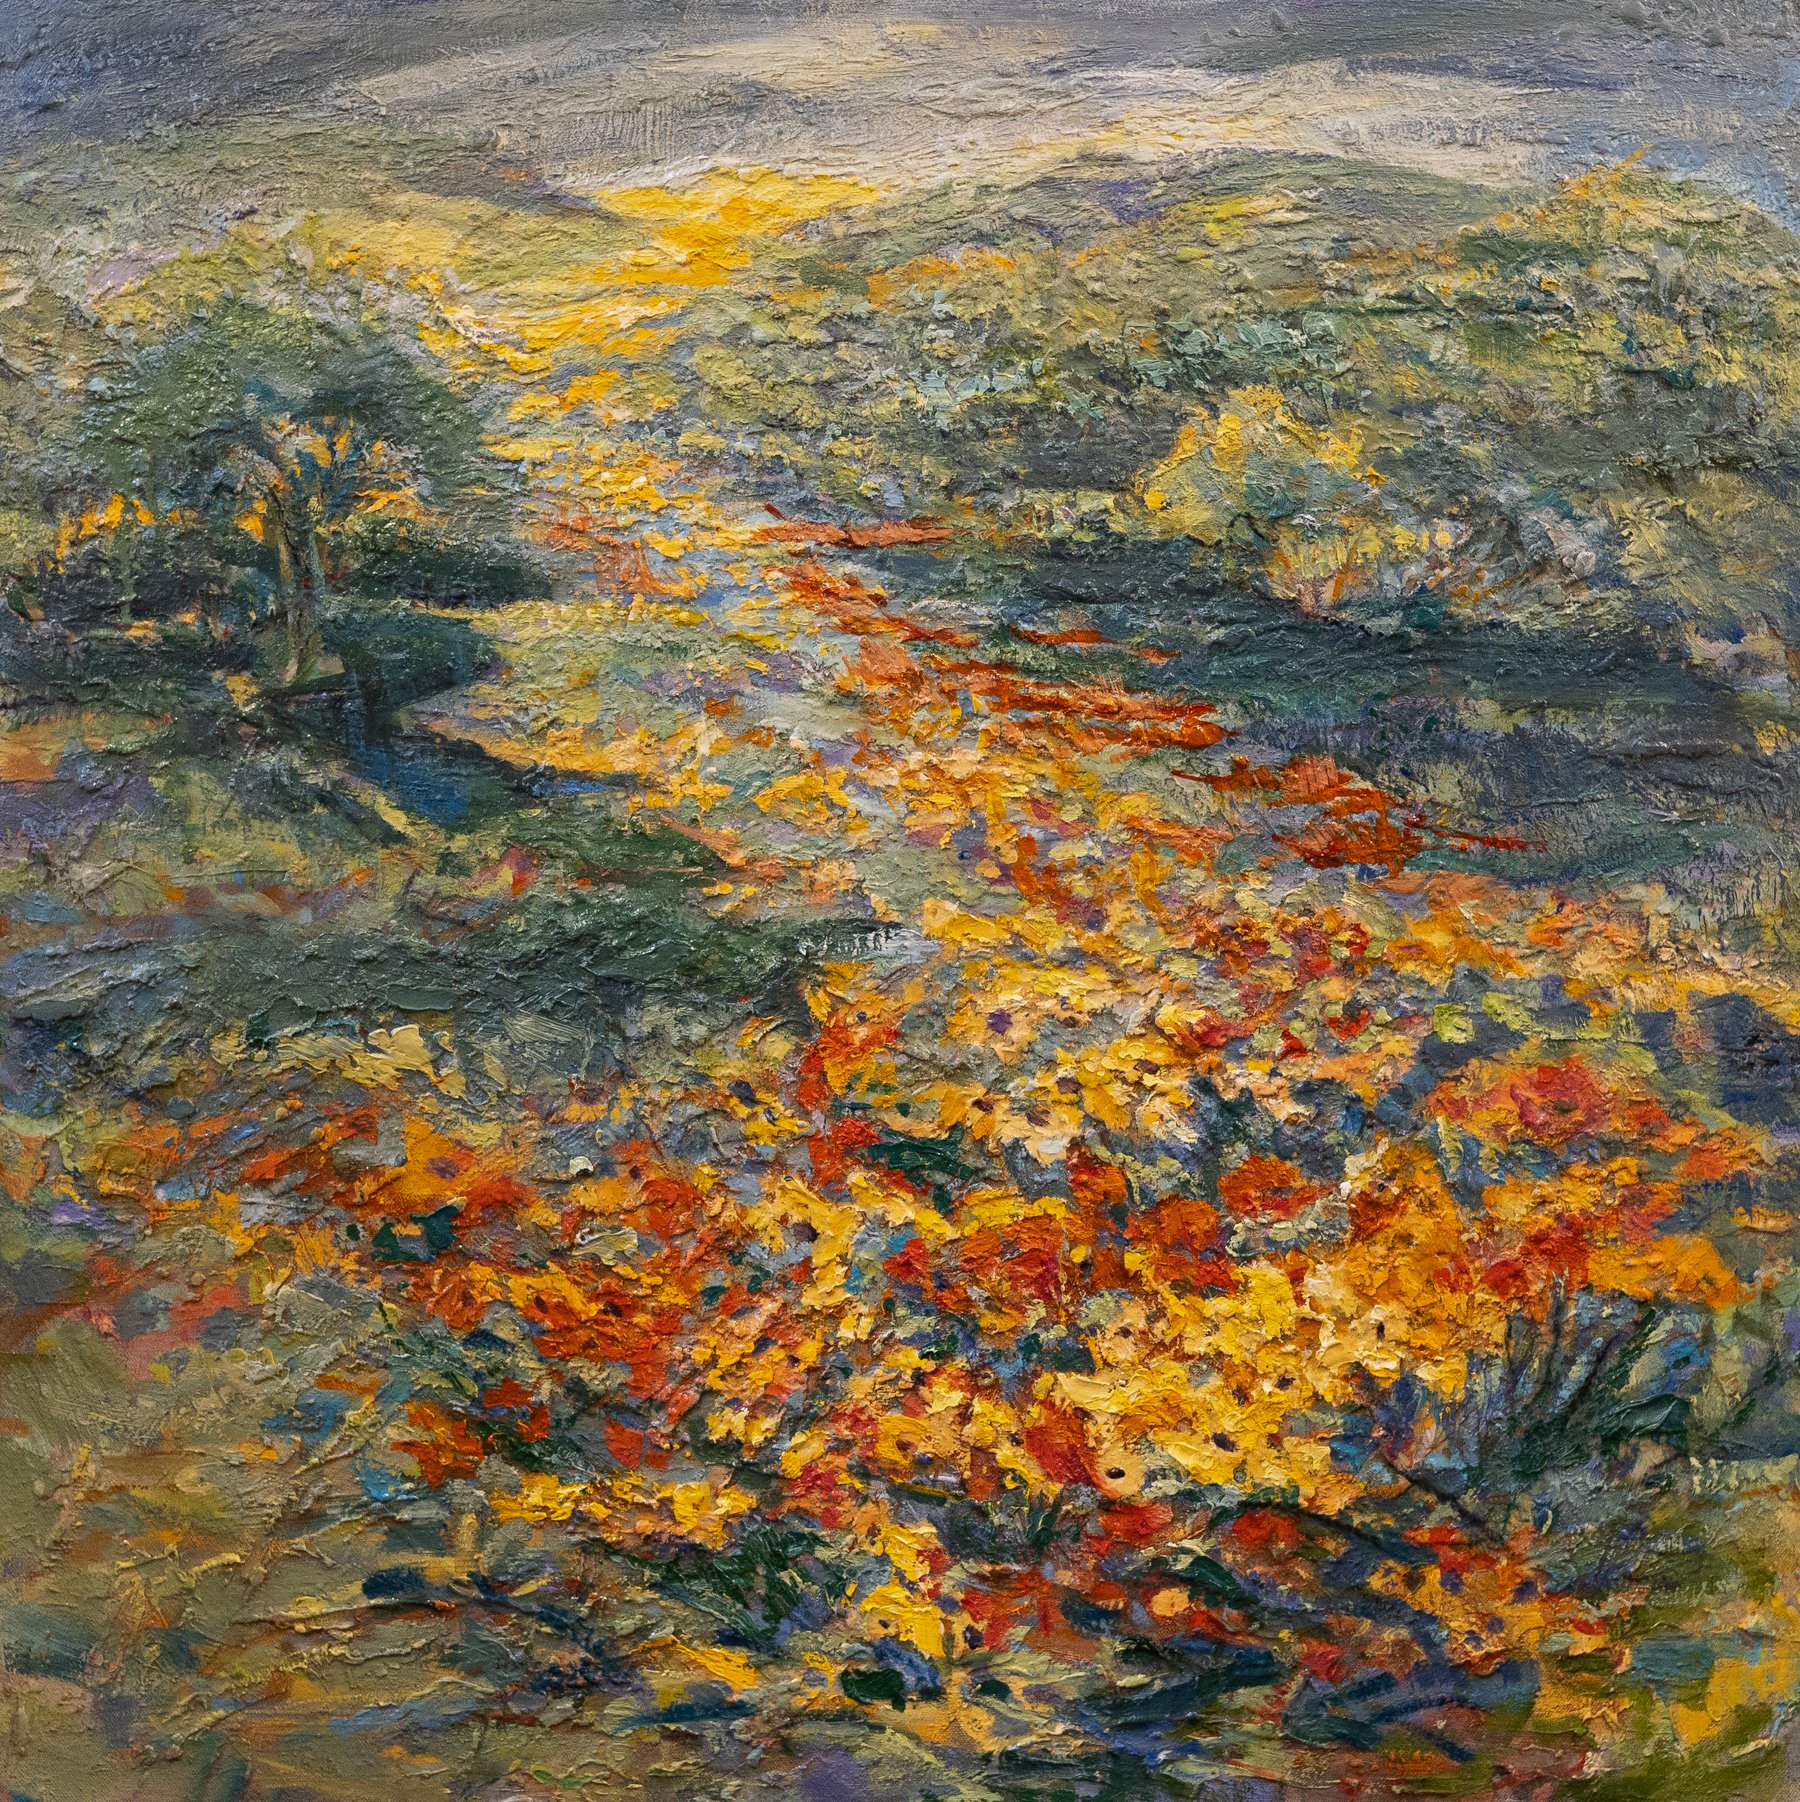   Field of Flowers   30" x 30"   Oil on canvas  